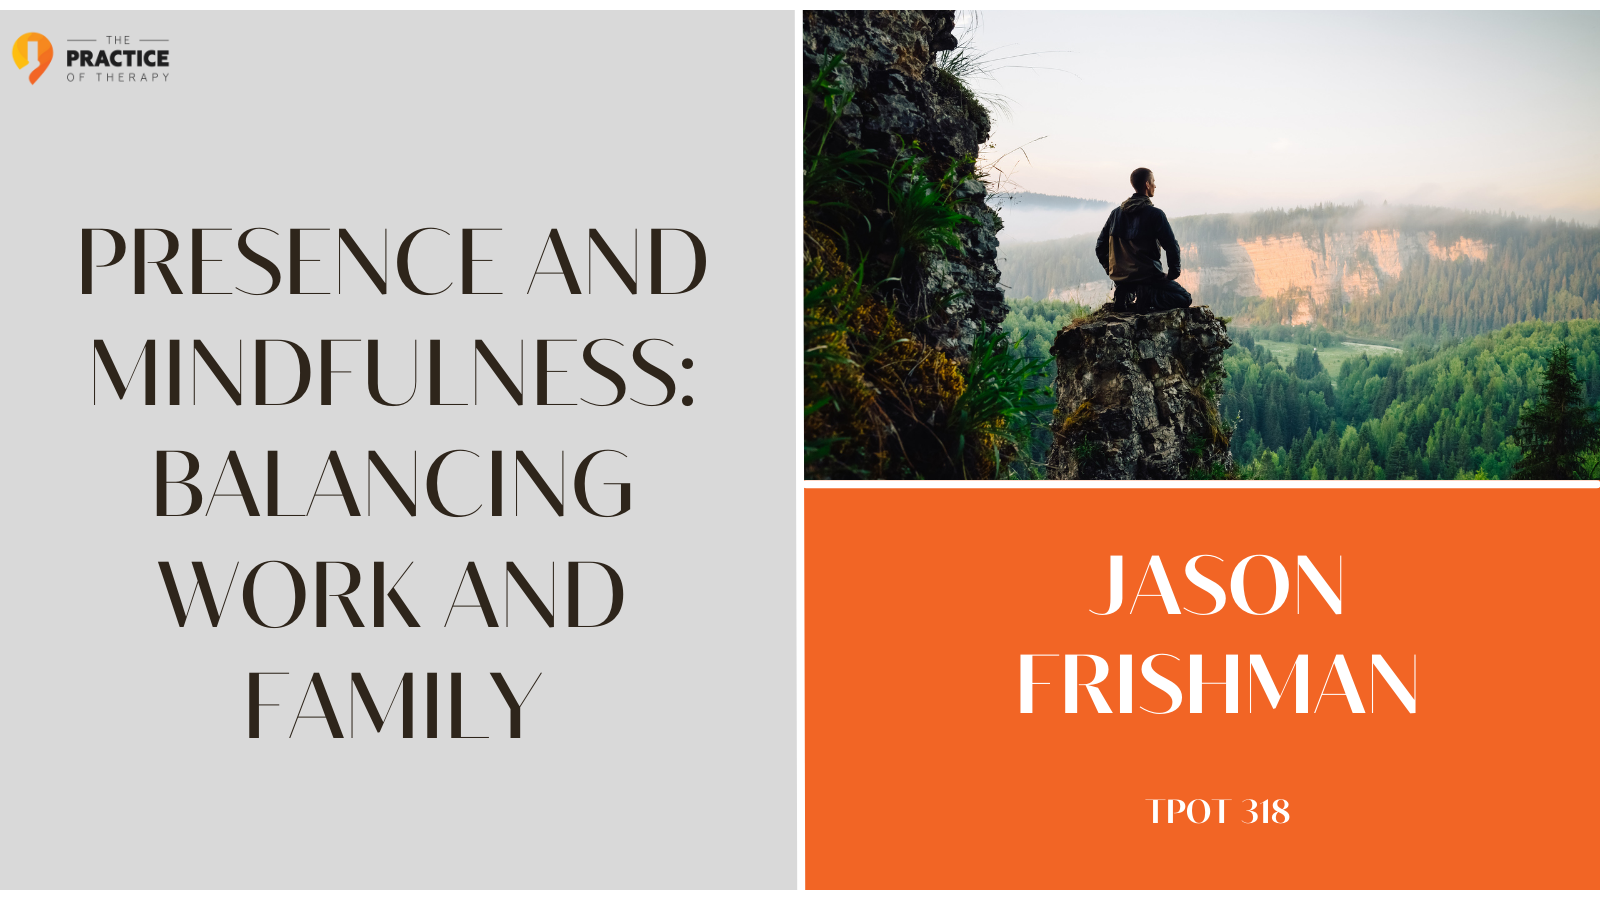 Jason Frishman Presence and Mindfulness Balancing Work and Family TPOT 318